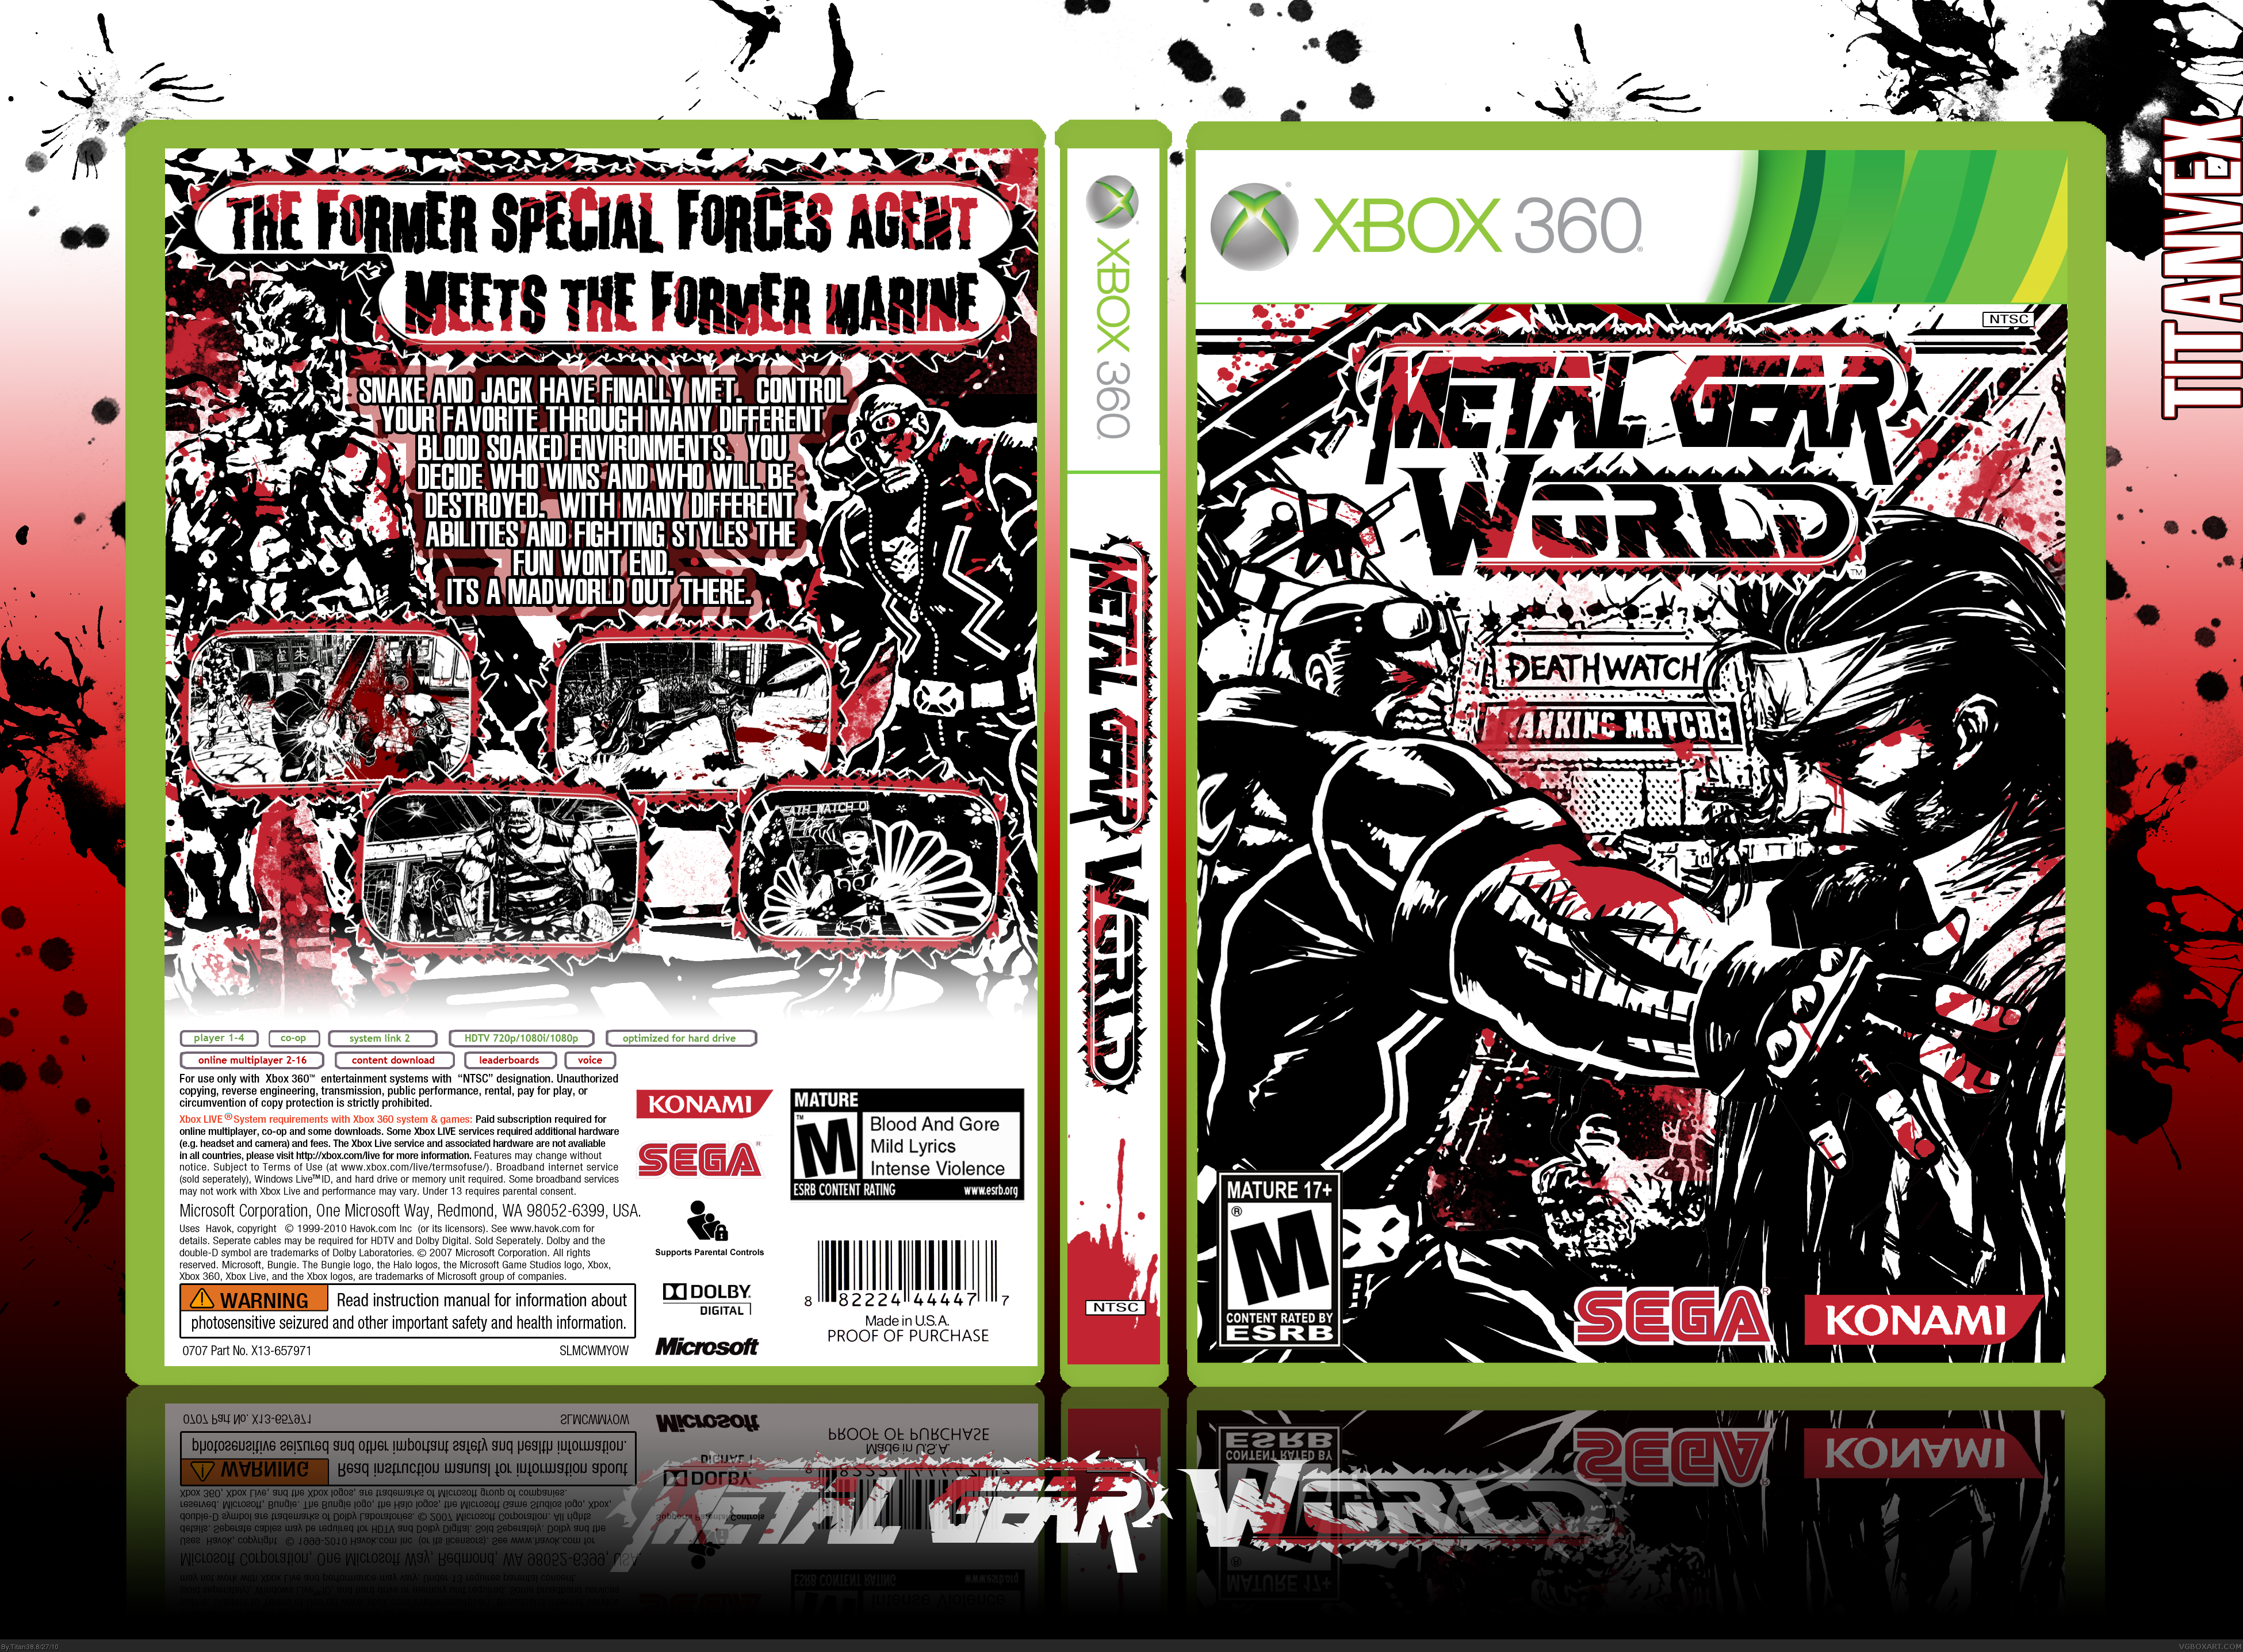 Metal Gear World box cover